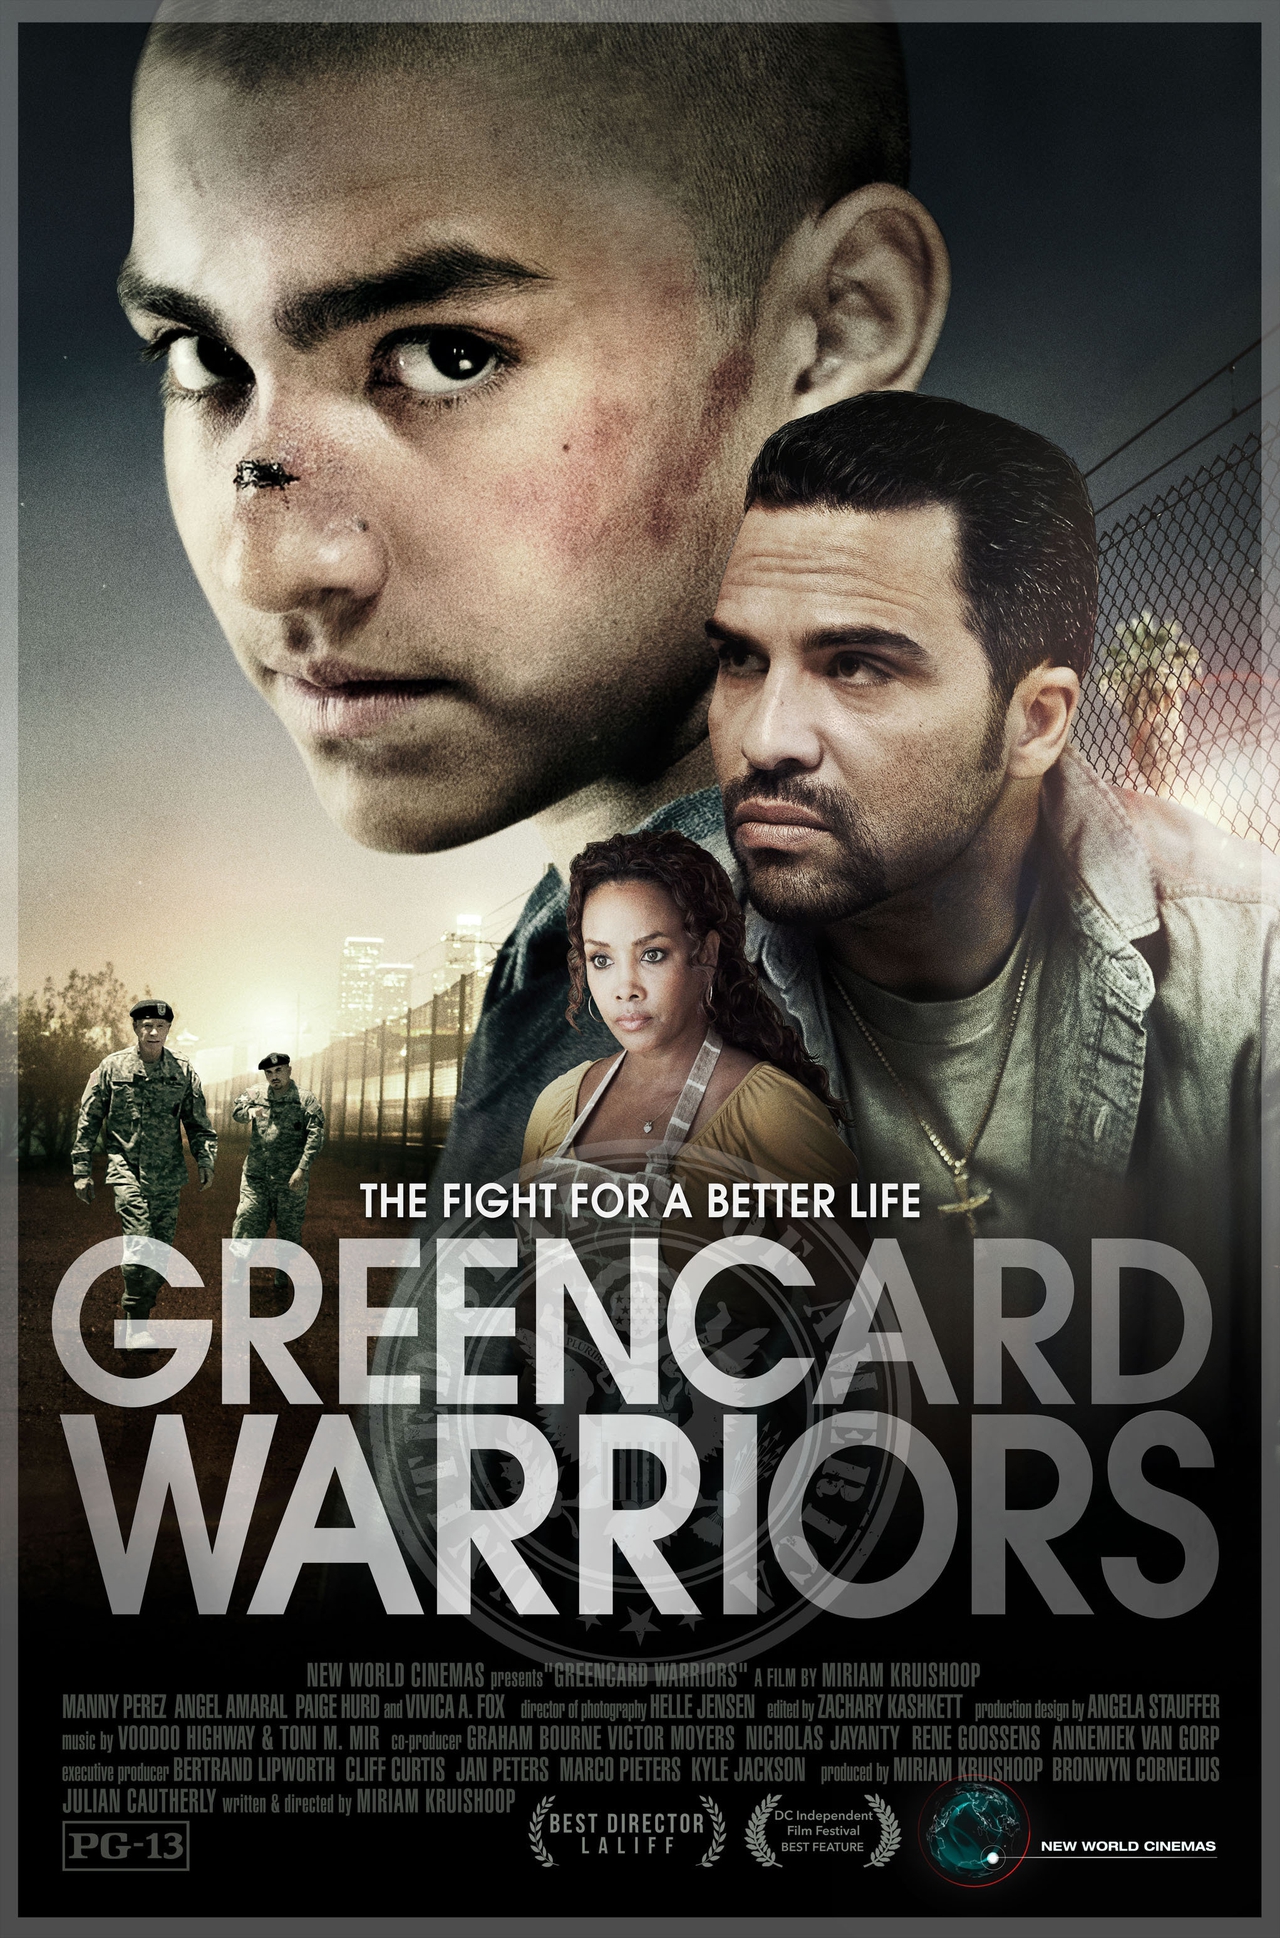 Manny Perez در صحنه فیلم سینمایی Greencard Warriors